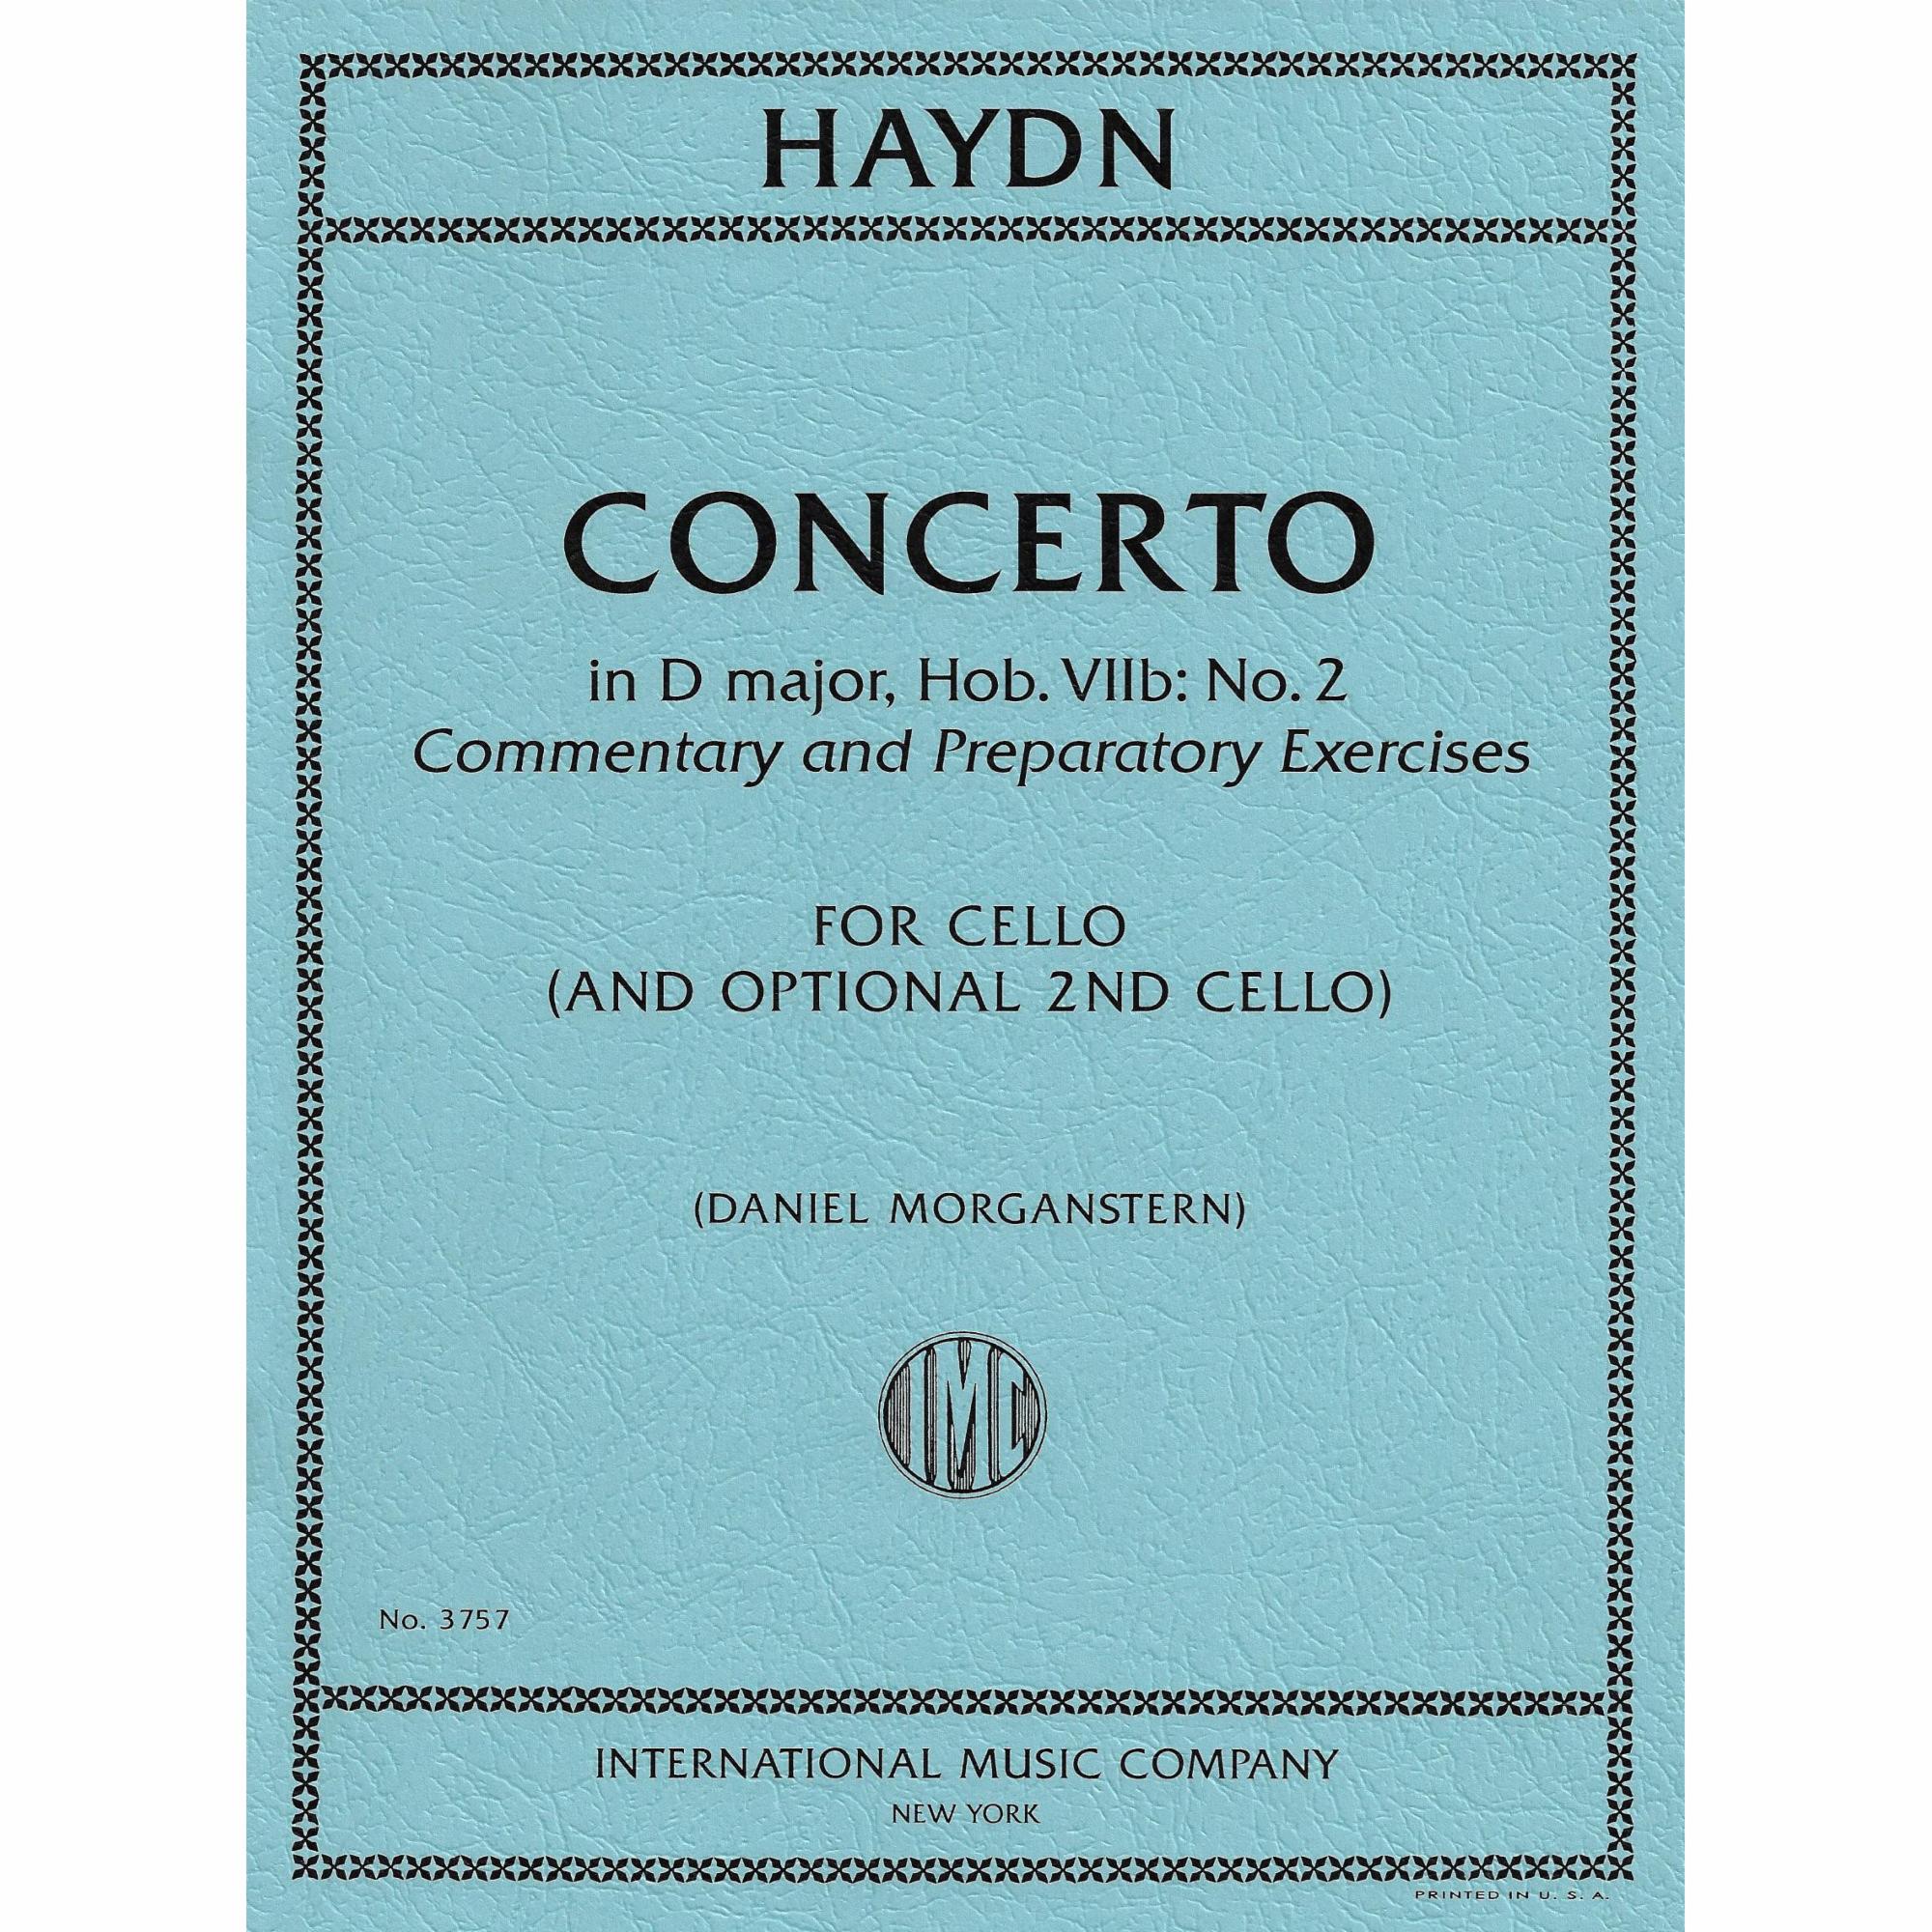 Haydn -- Concerto in D Major, Hob. VIIb: No. 2 for Two Cellos